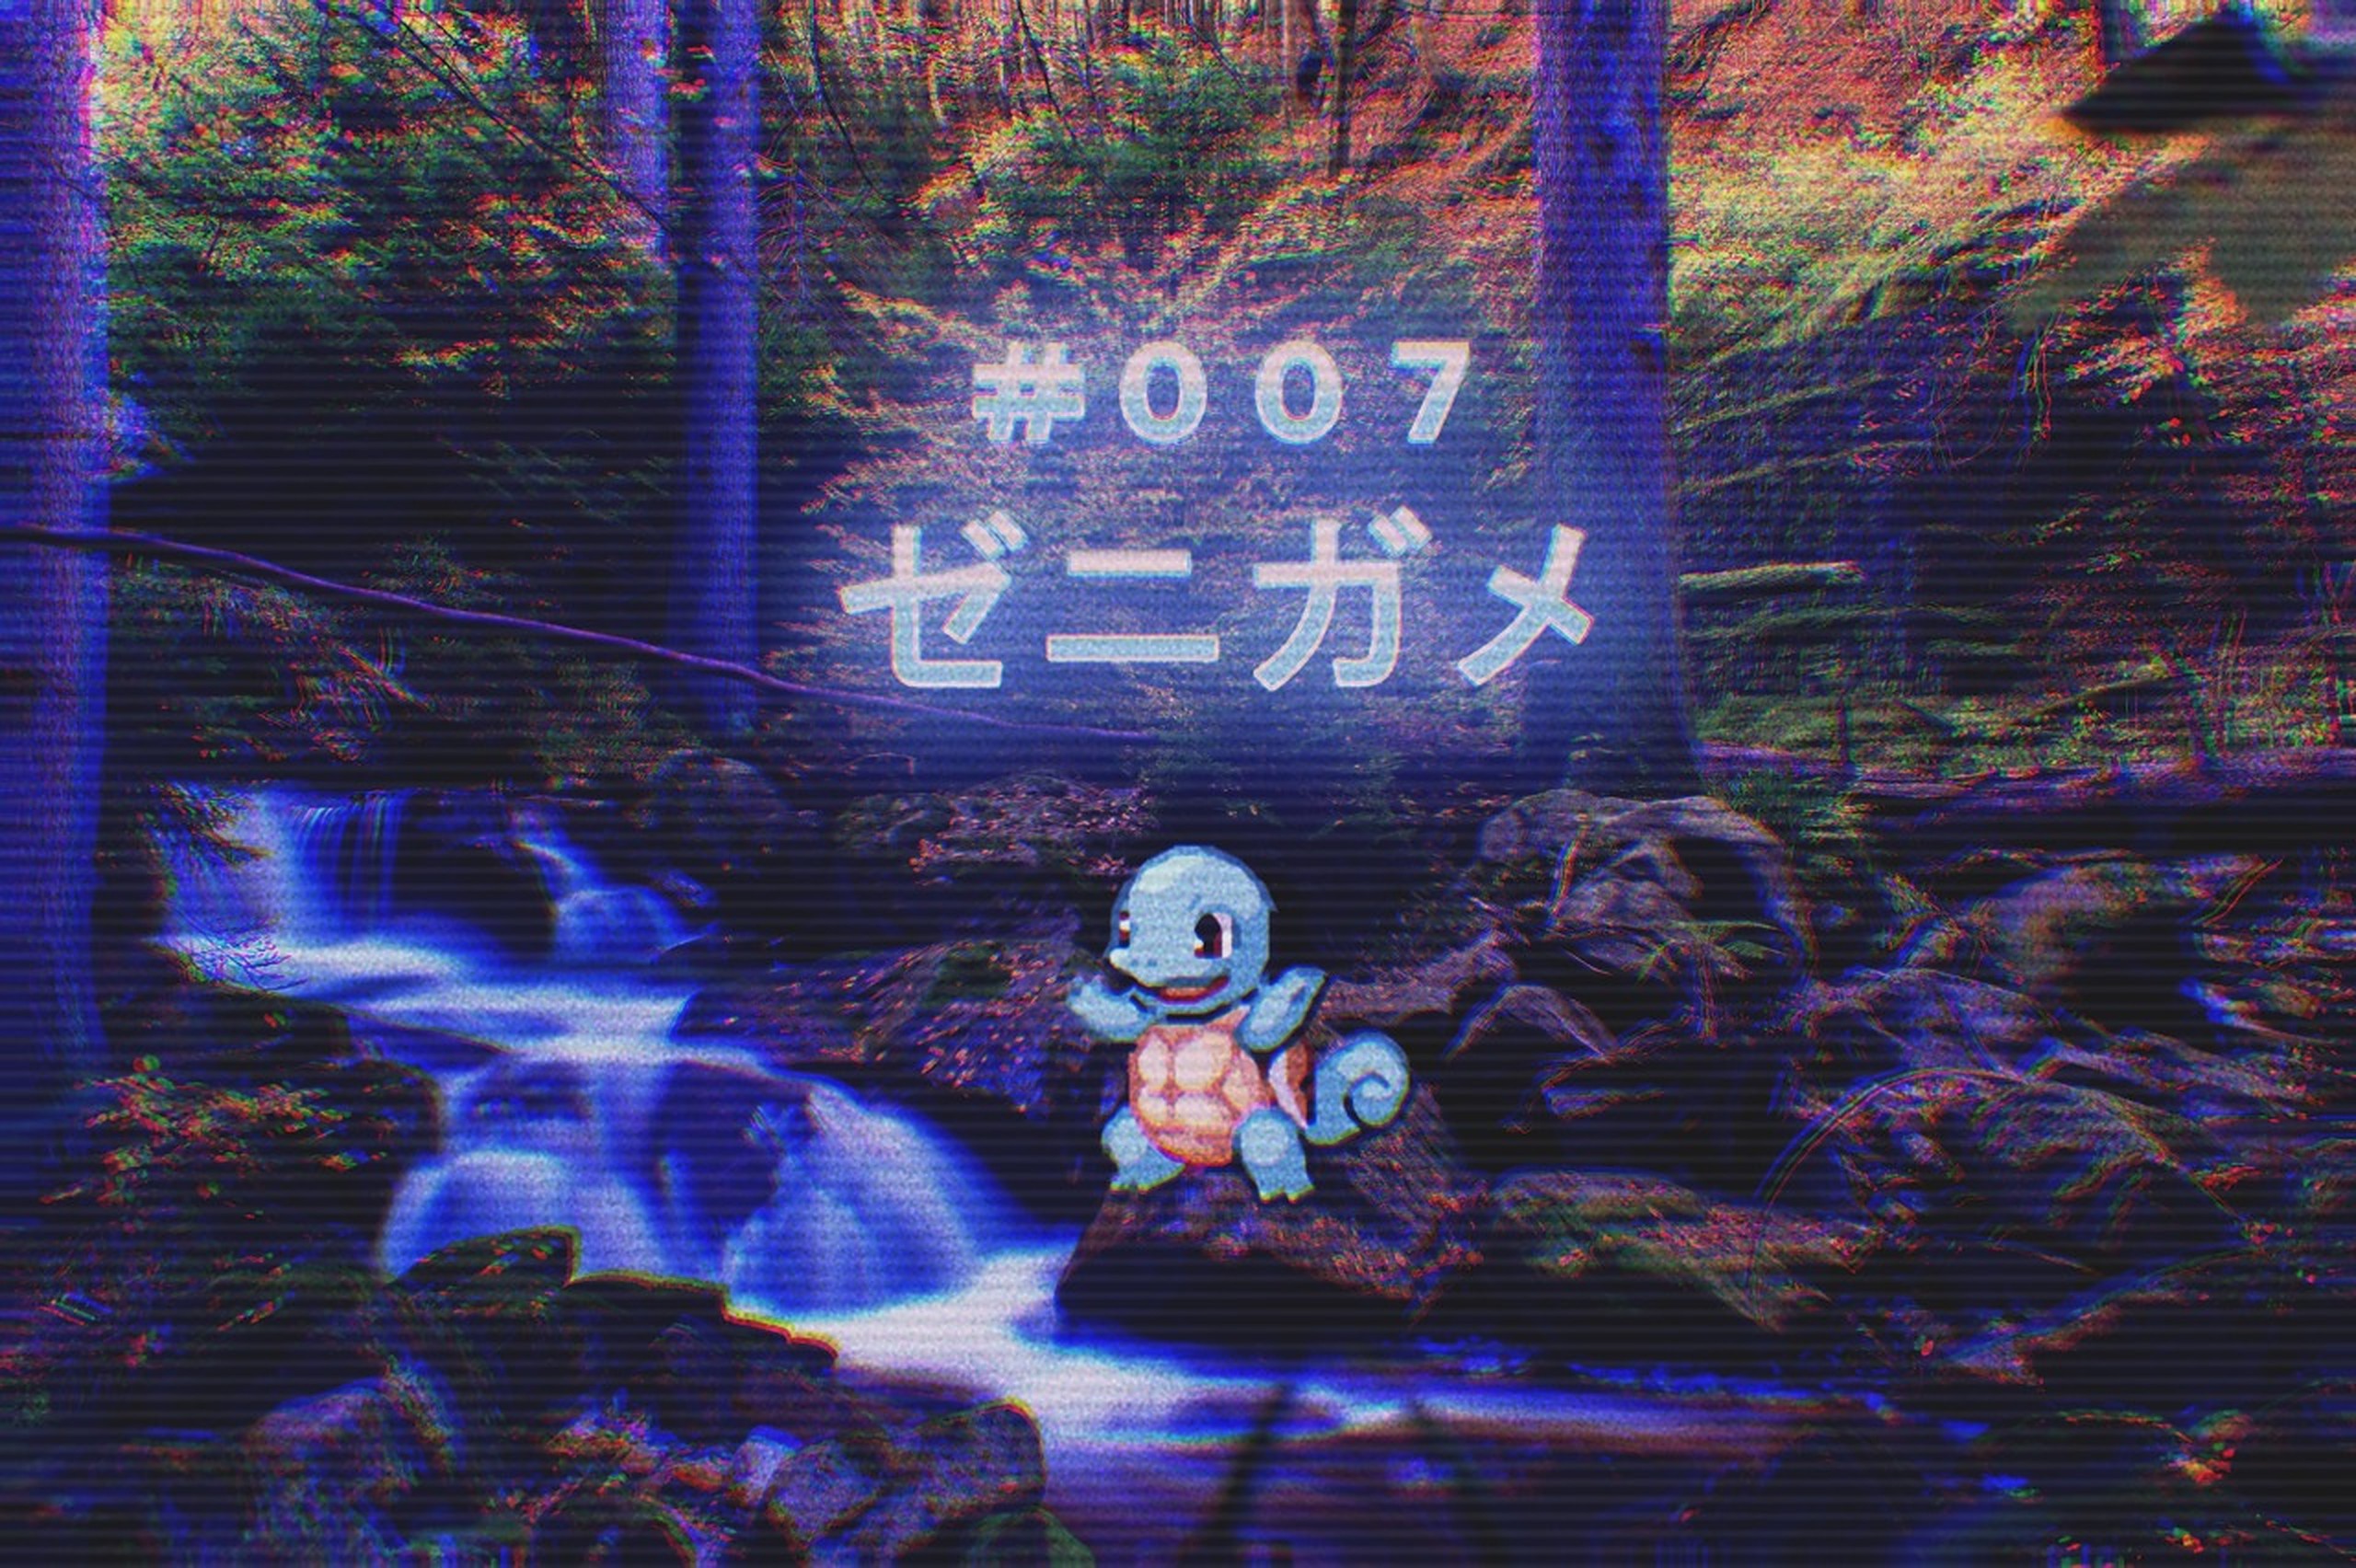 Anime 2560x1704 Pokémon Squirtle Zenigame vaporwave river forest landscape nature Nintendo Pokemon First Generation water anime